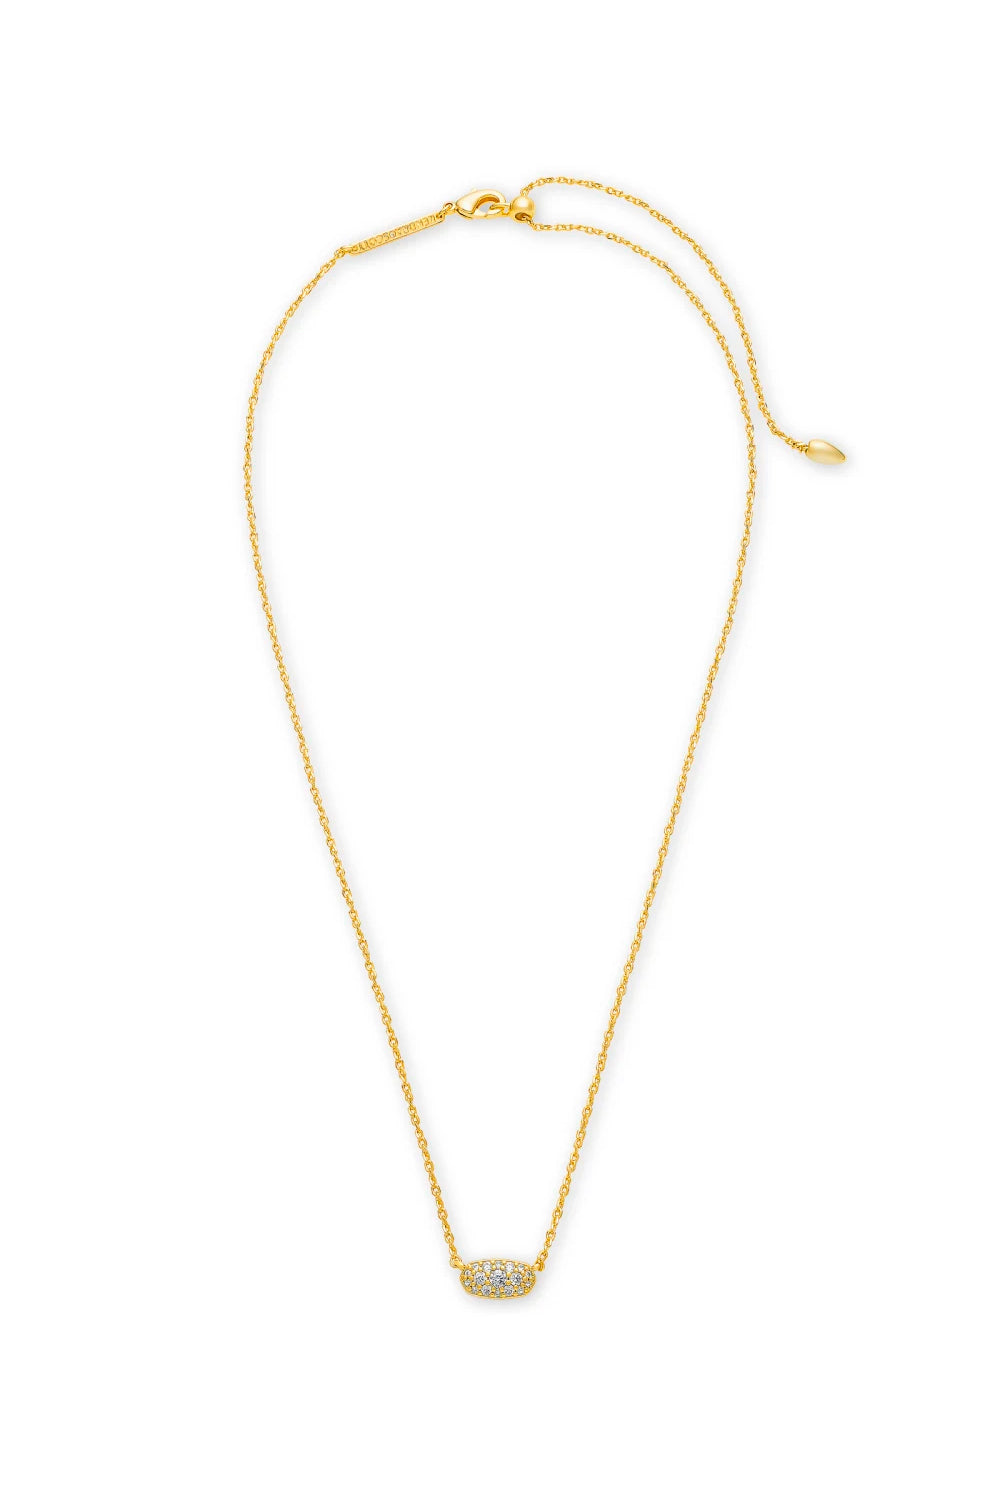 Kendra Scott: Grayson Gold Pendant Necklace - White Crystal | Makk Fashions